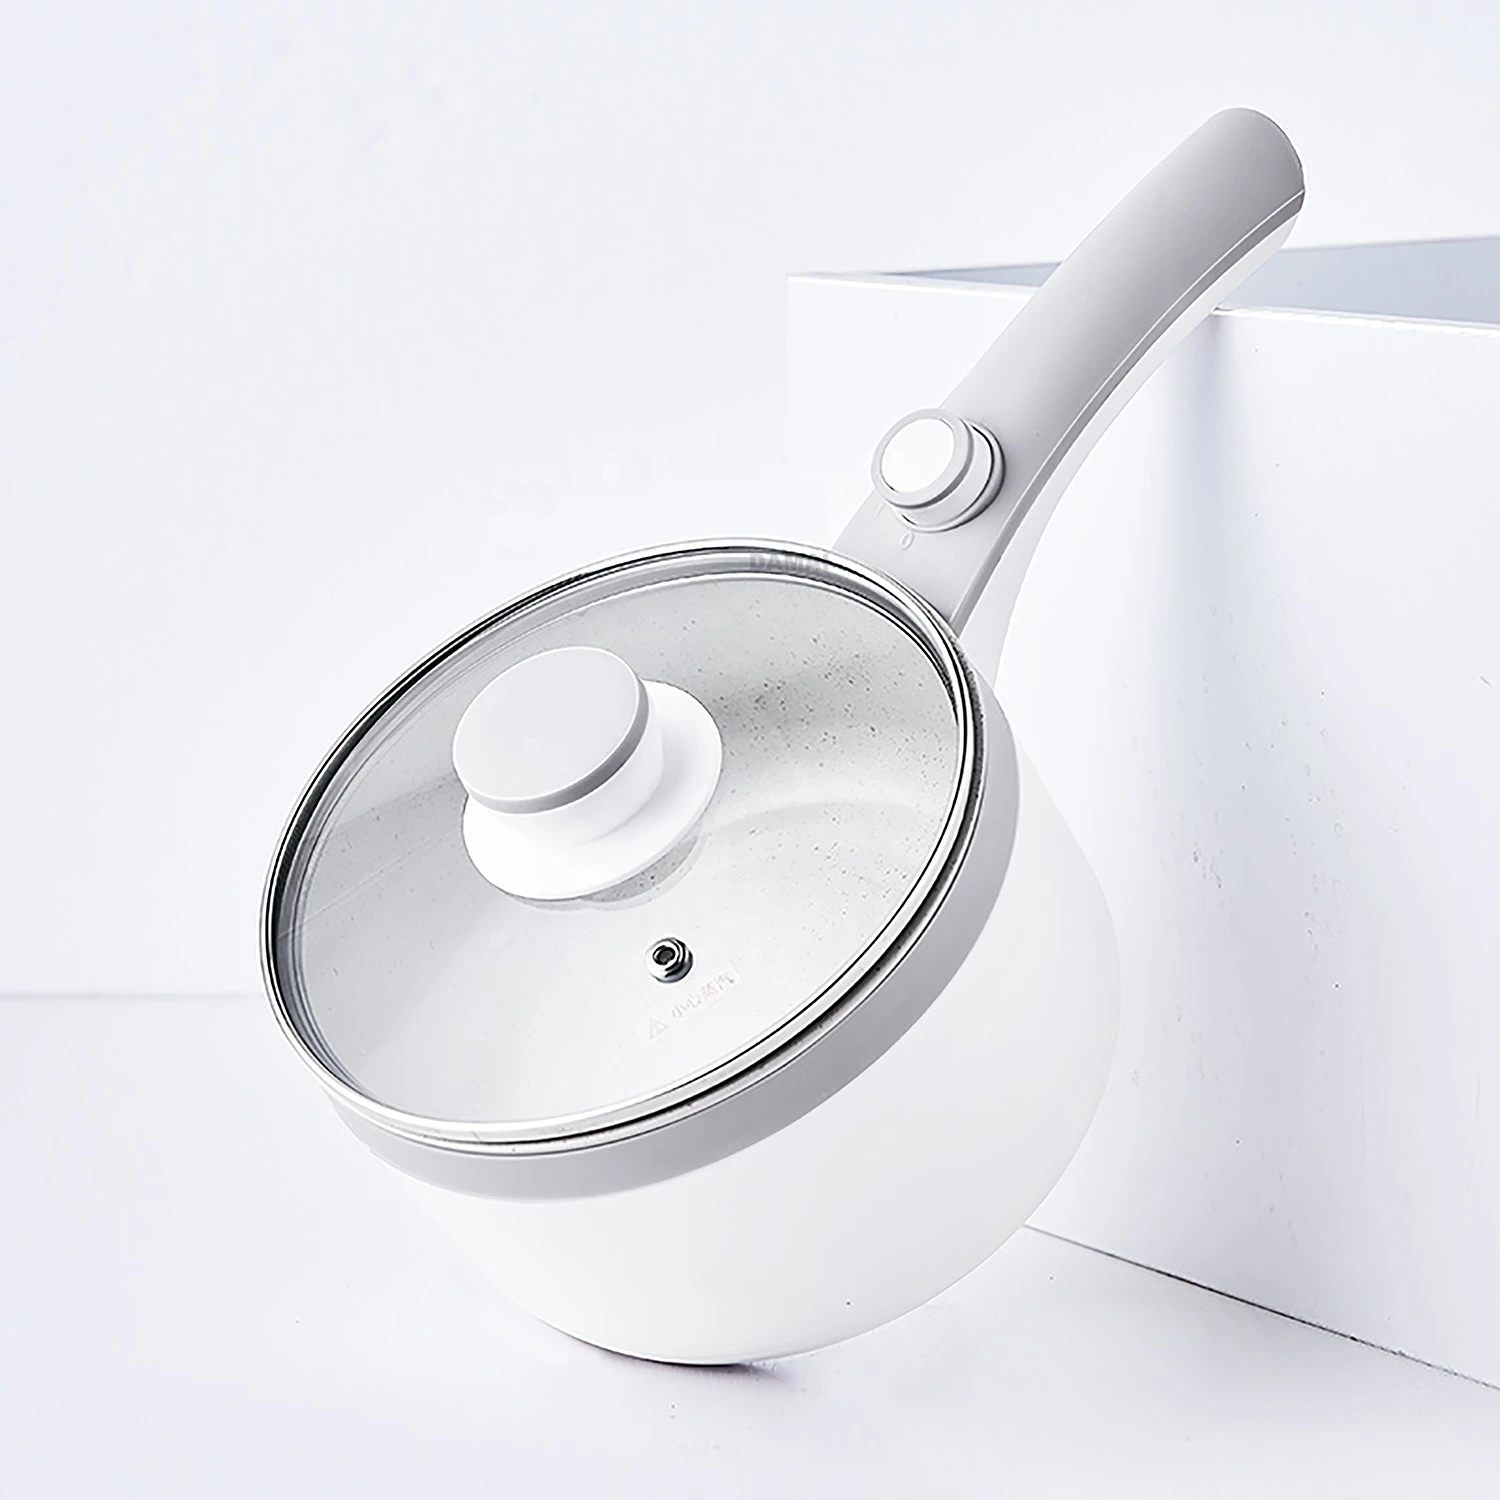 2021 Electric Multi Mini Cooking Pot Function Frying Pan Non Stick Ceramic Coating Cooking Hot Pot